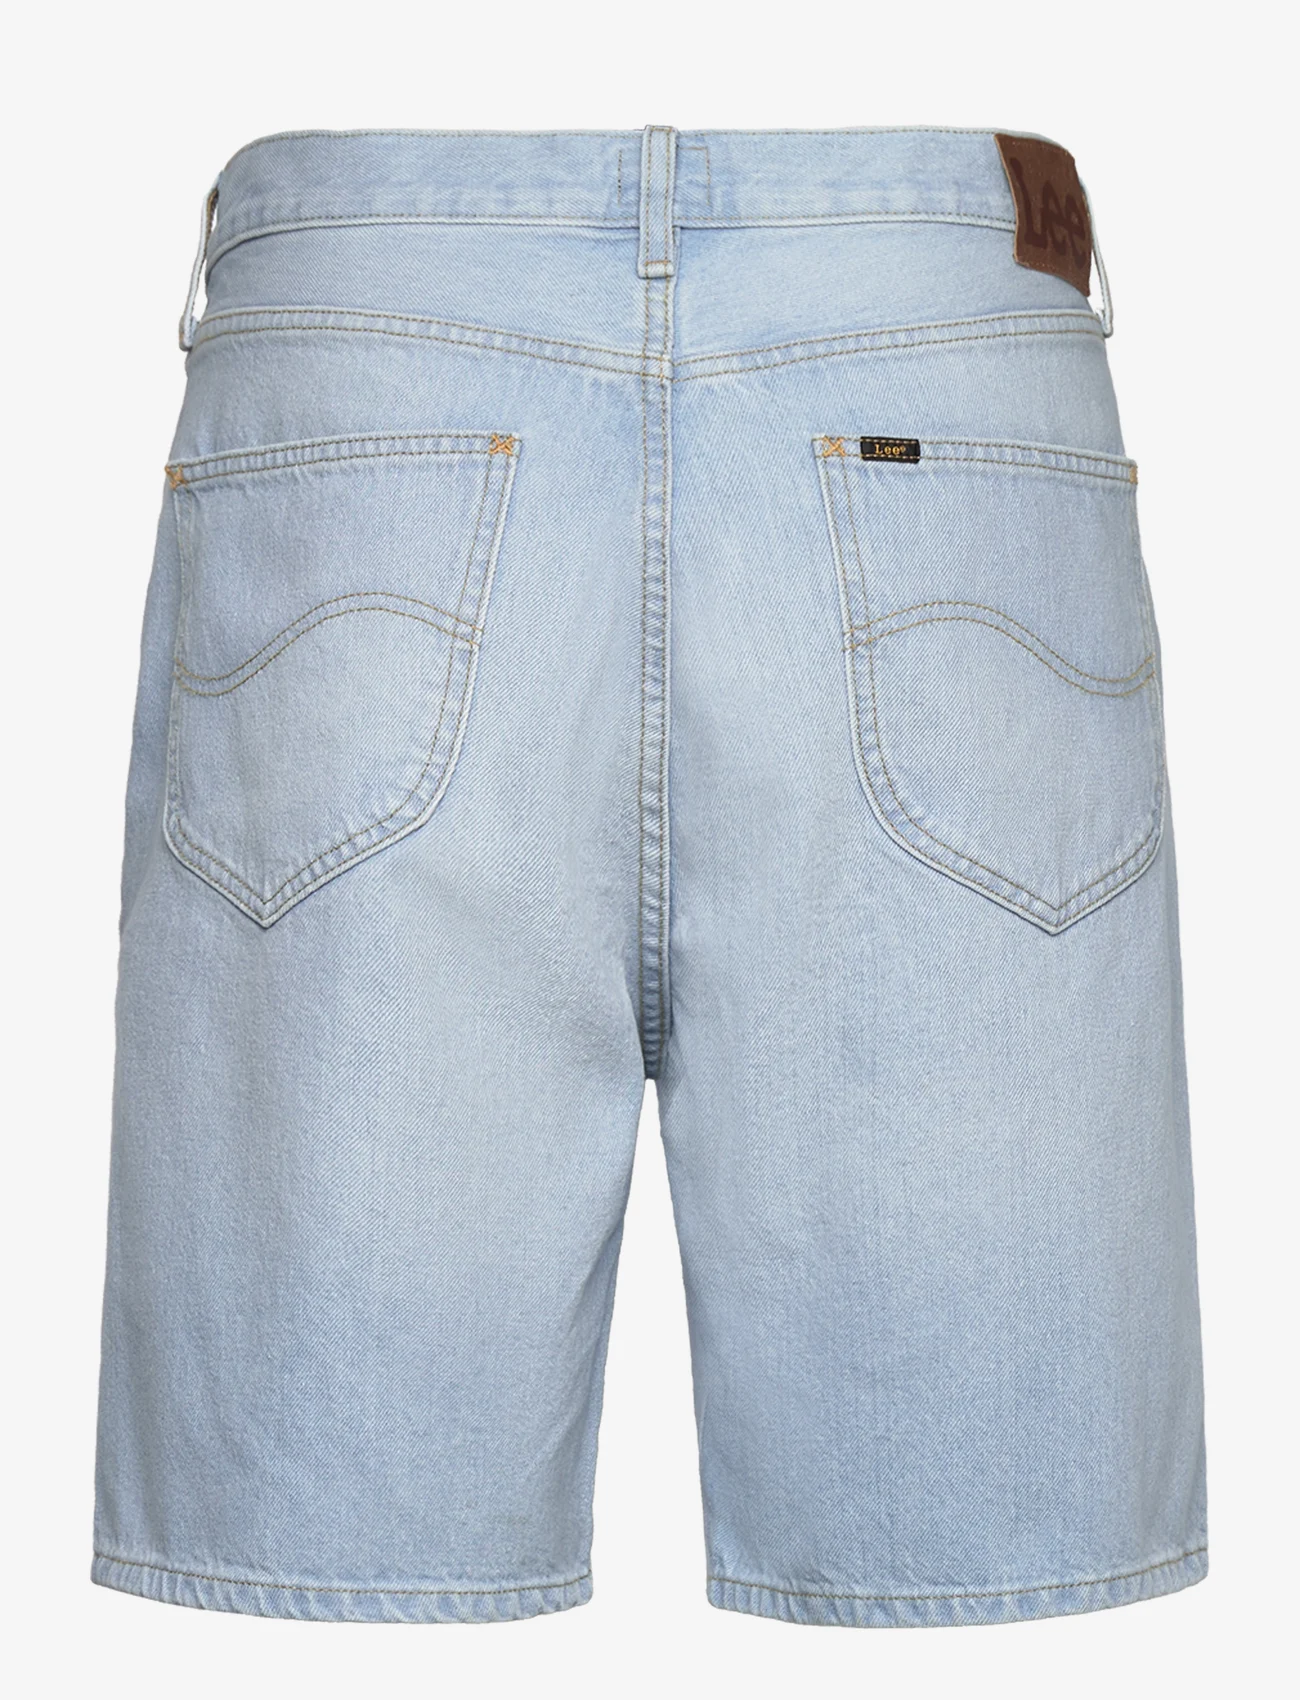 Lee Jeans - ASHER SHORT - džinsa šorti - light stone wash - 1